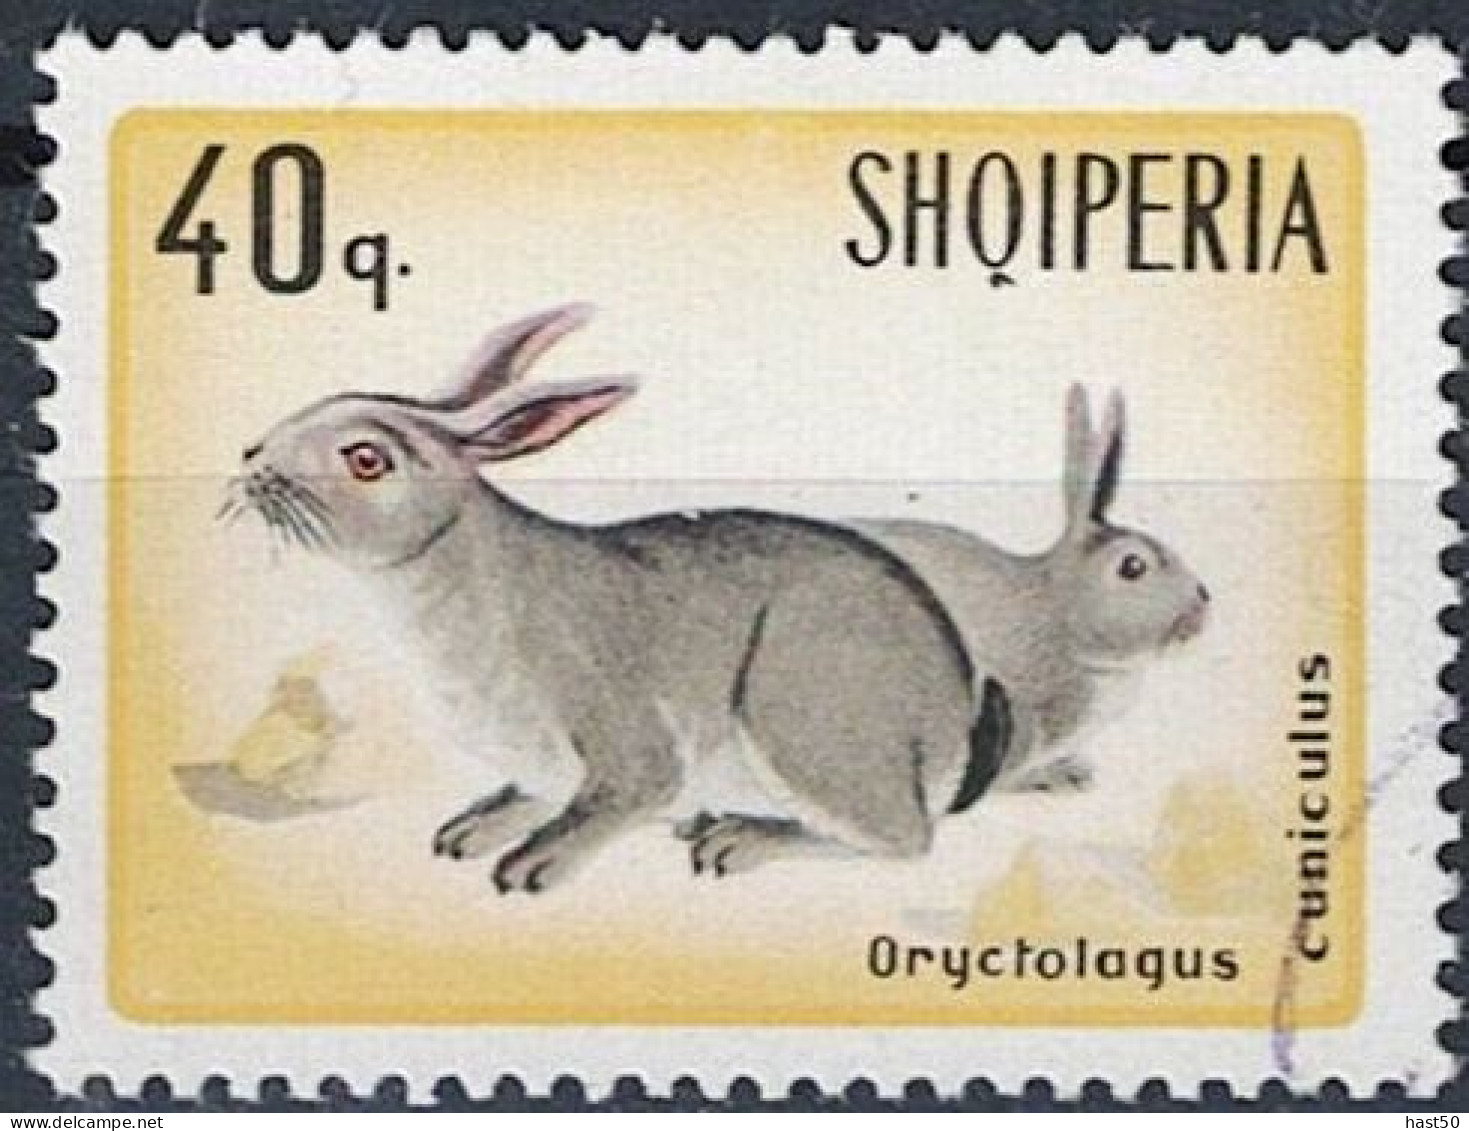 Albanien Albania Albanie - Wildkaninchen (Oryctolagus Cuniculus) (MiNr: 1197) 1967 - Gest Used Obl - Albanië